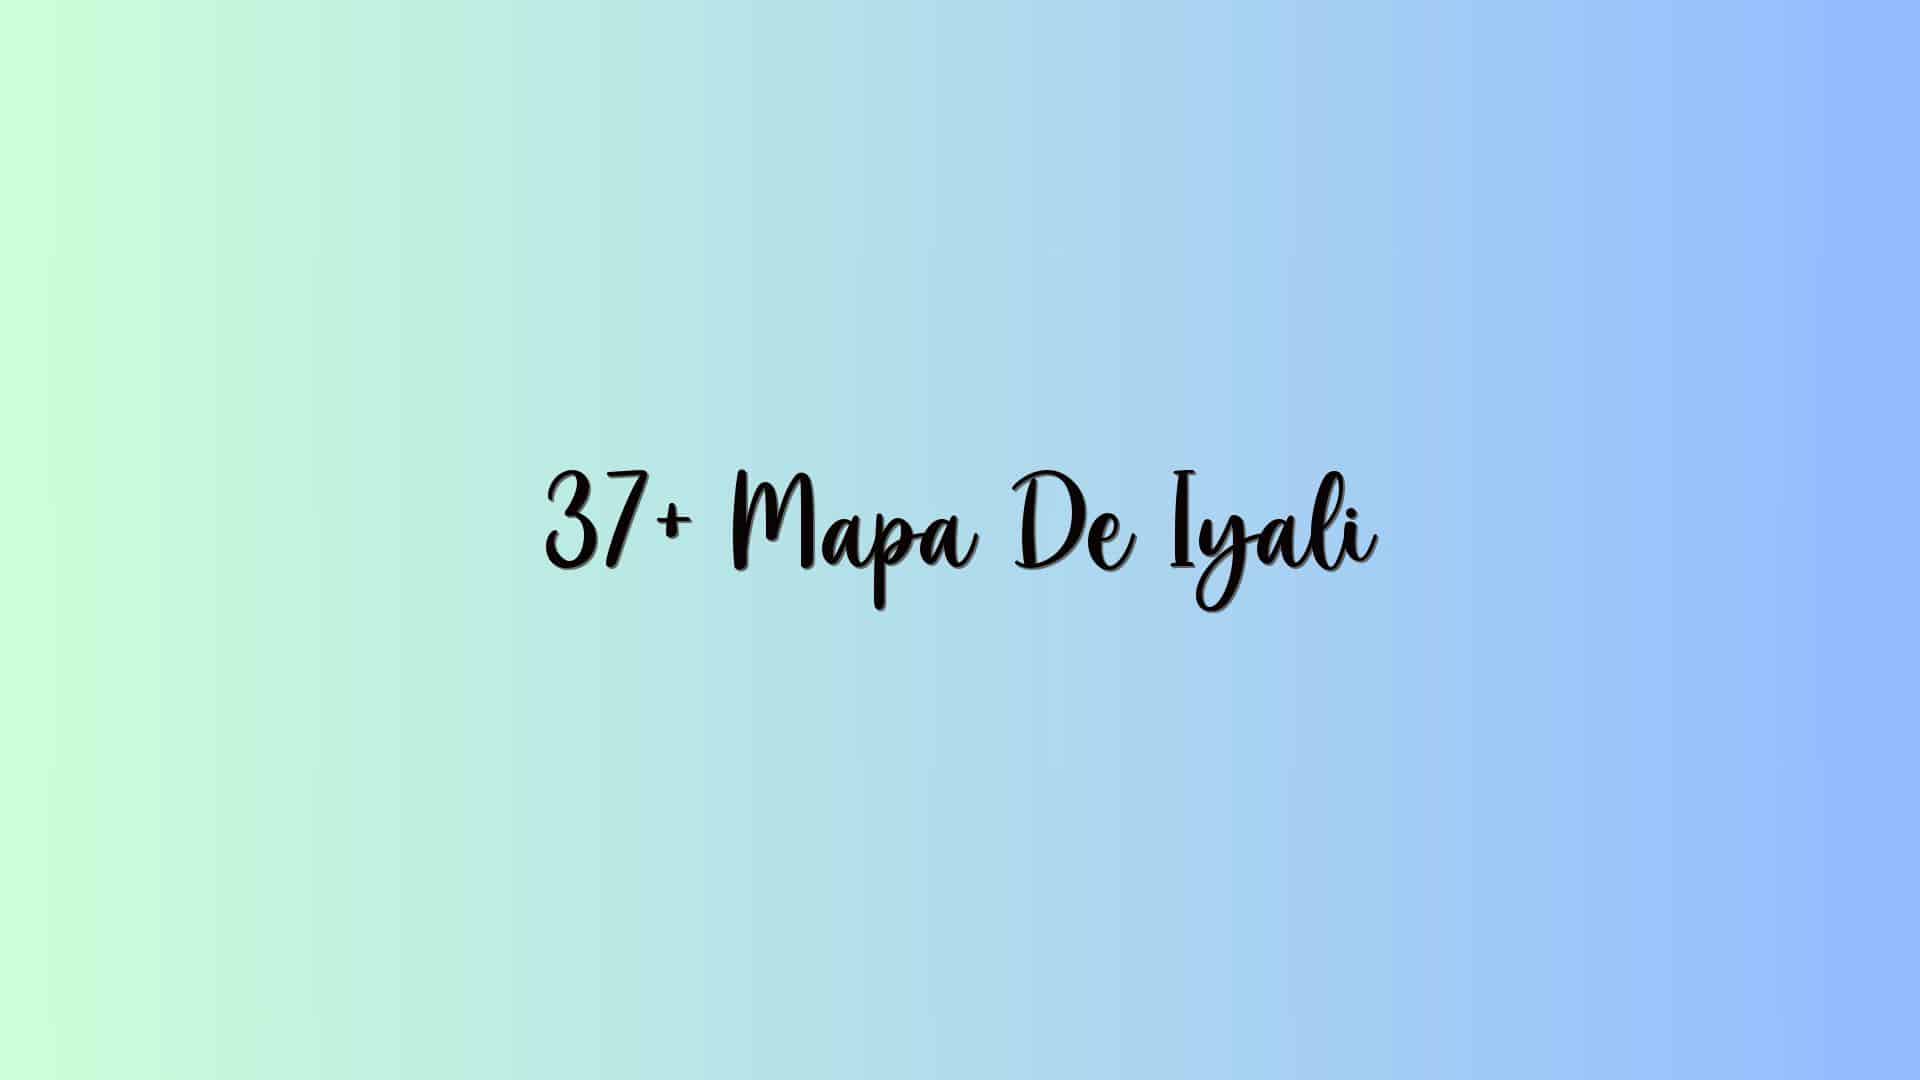 37+ Mapa De Iyali